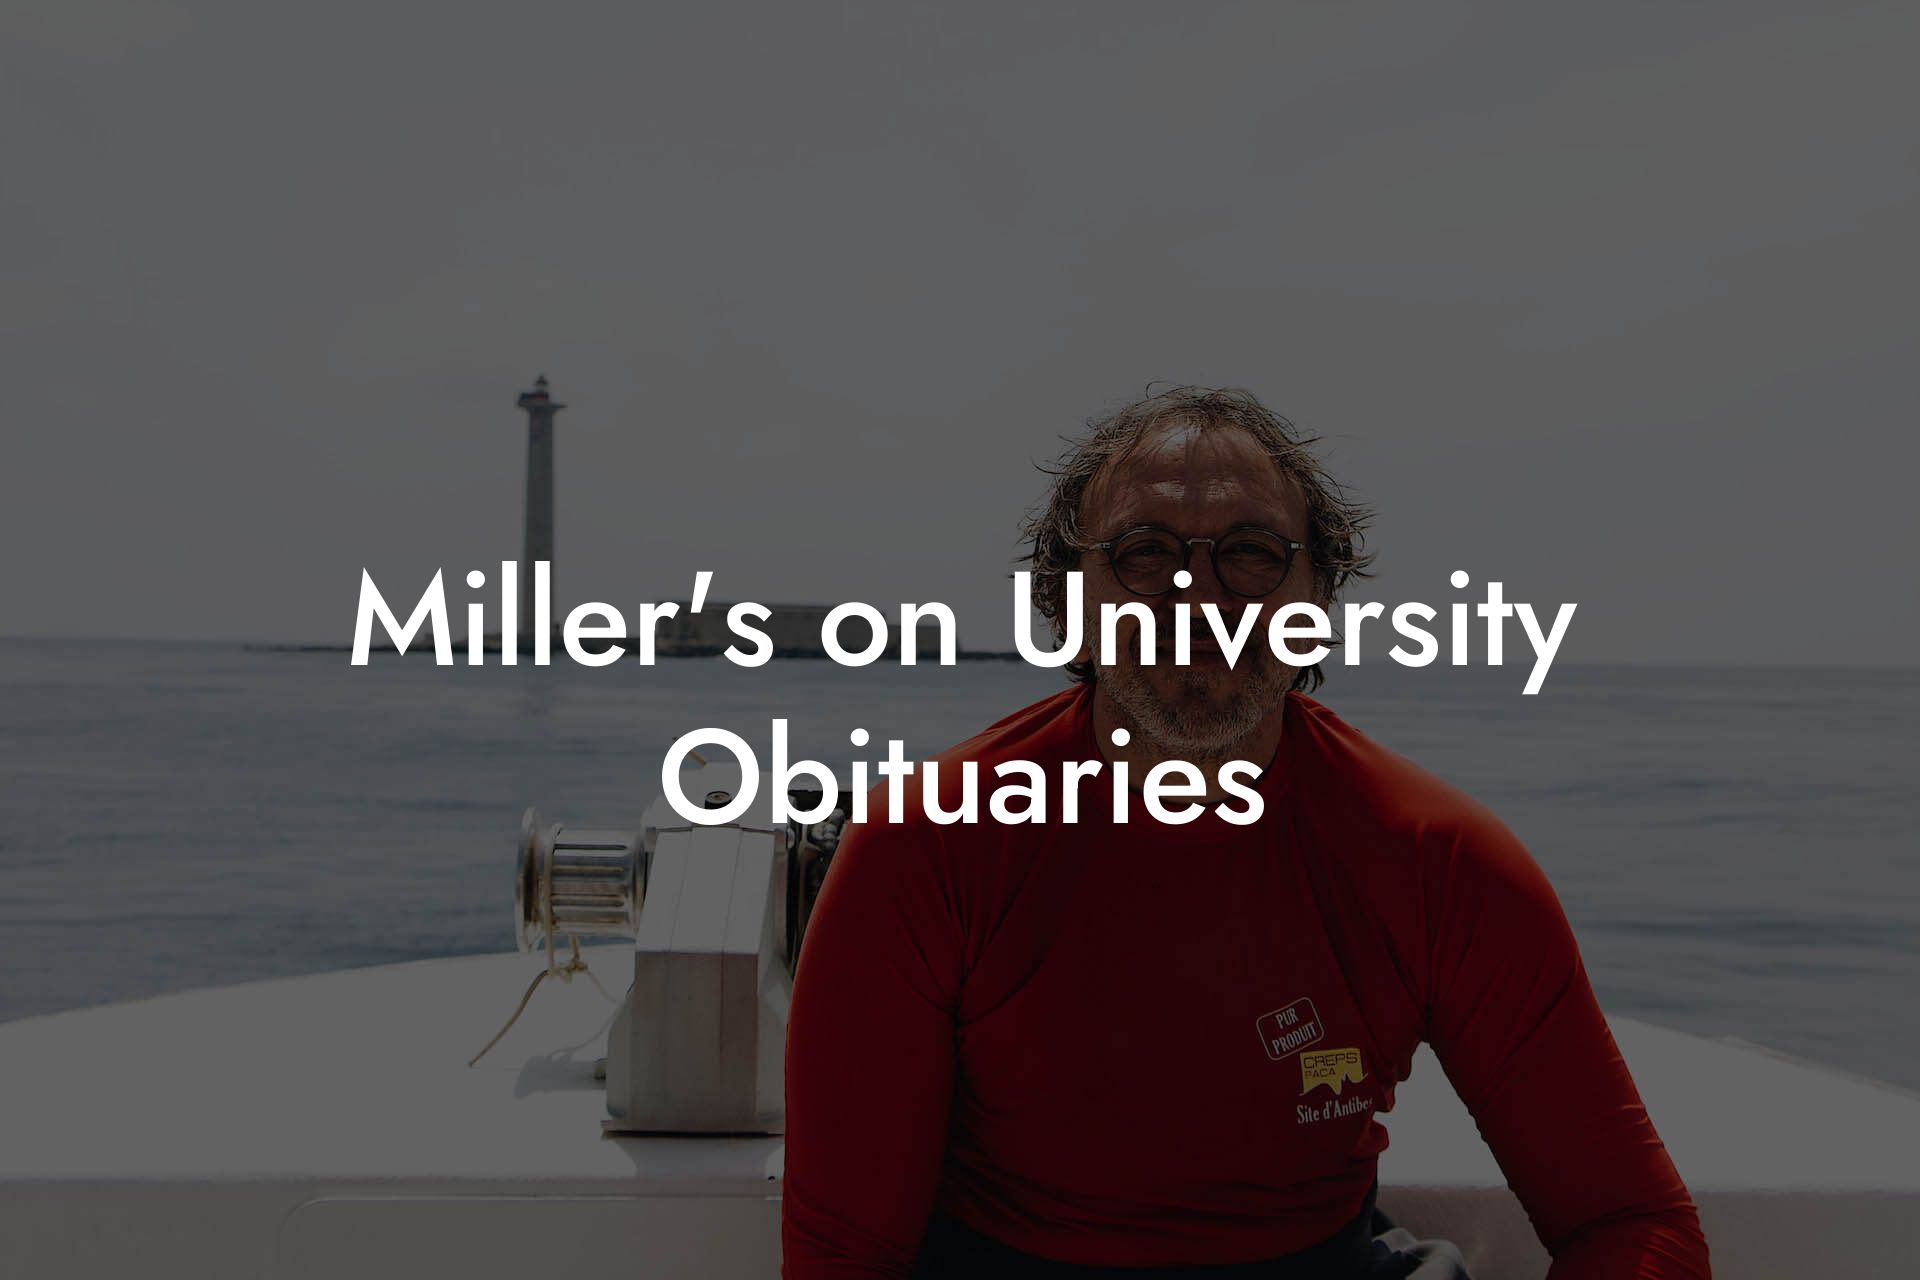 Miller's on University Obituaries